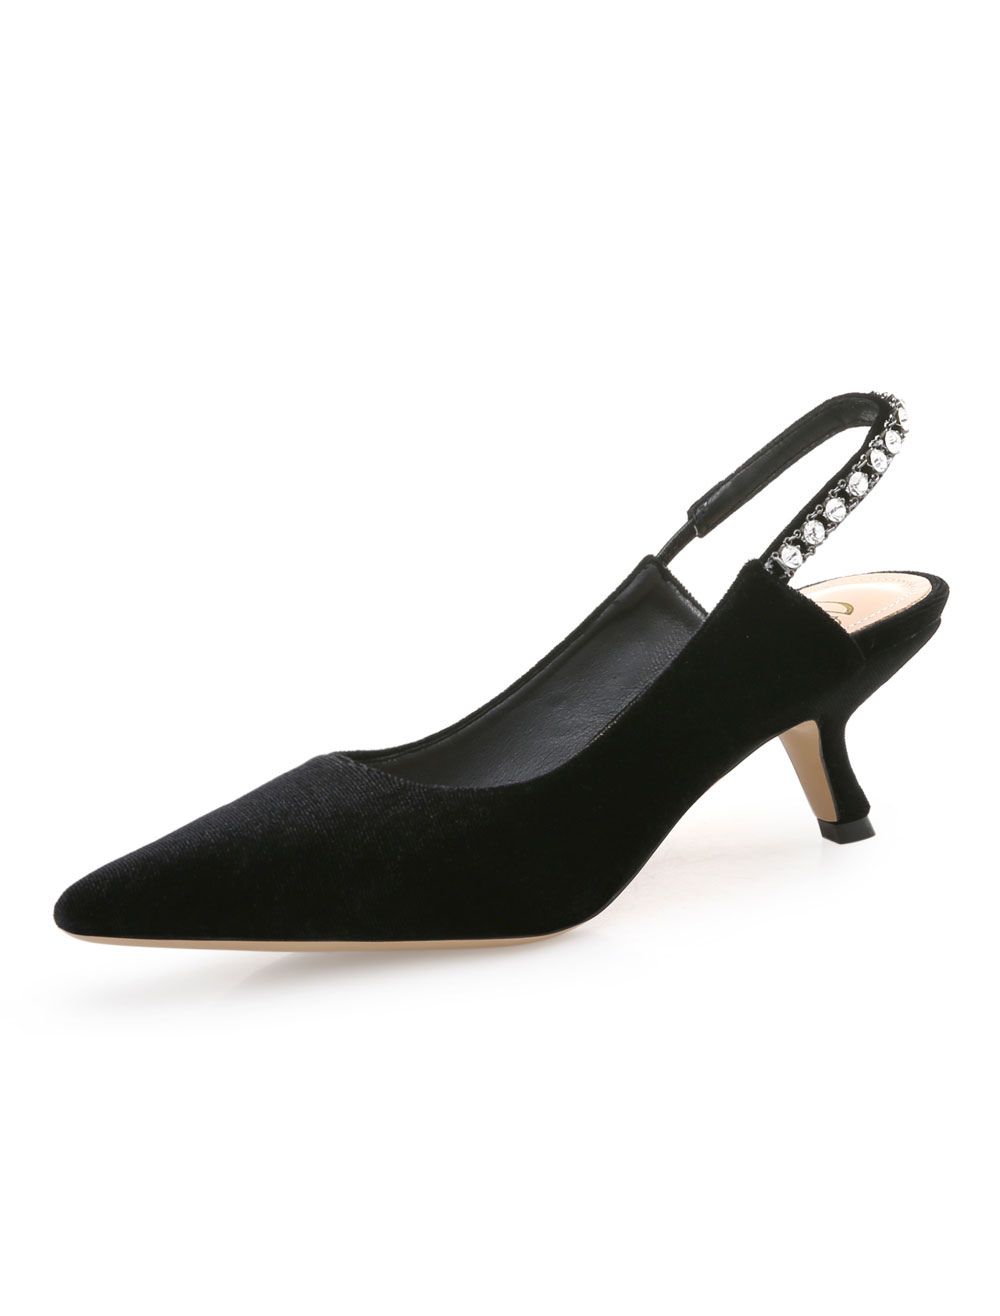 Black Pump Shoes Pointed Toe Rhinestones Slingbacks Slip On Kitten Heels For Women | Milanoo